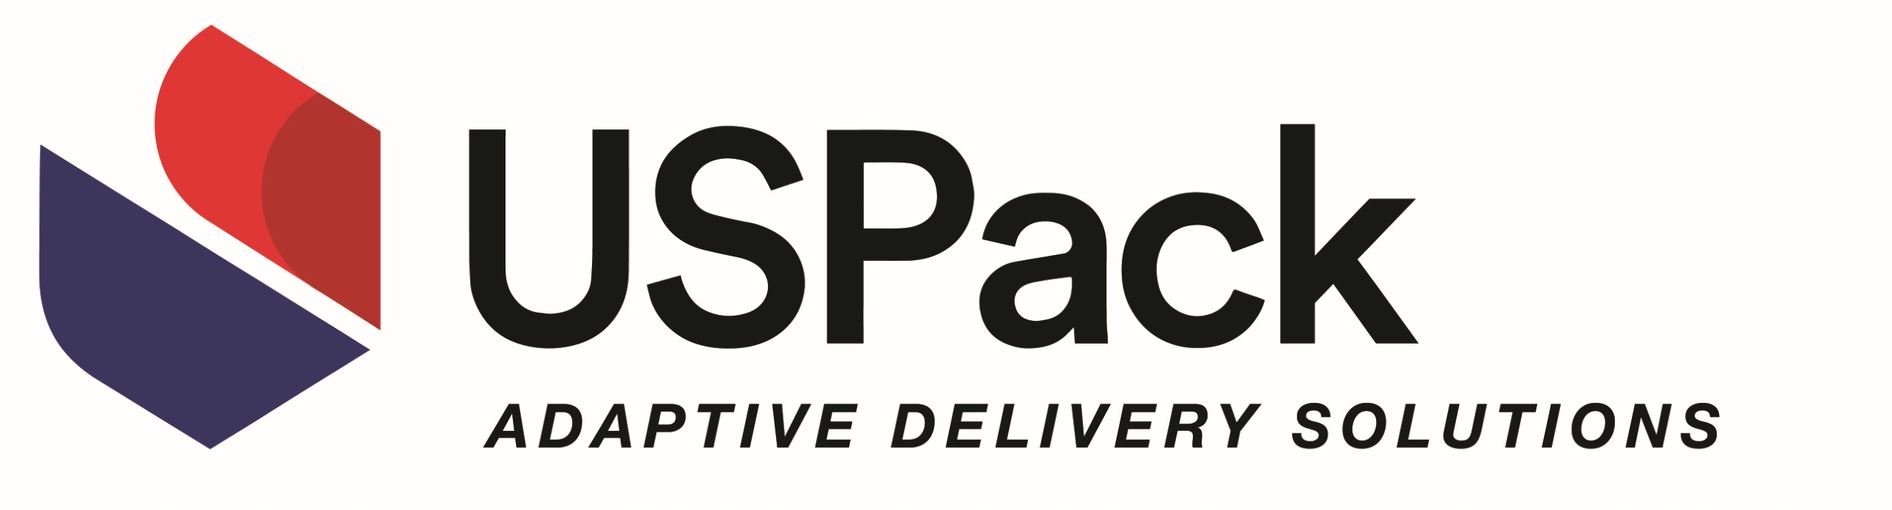 USPack Logo.jpg